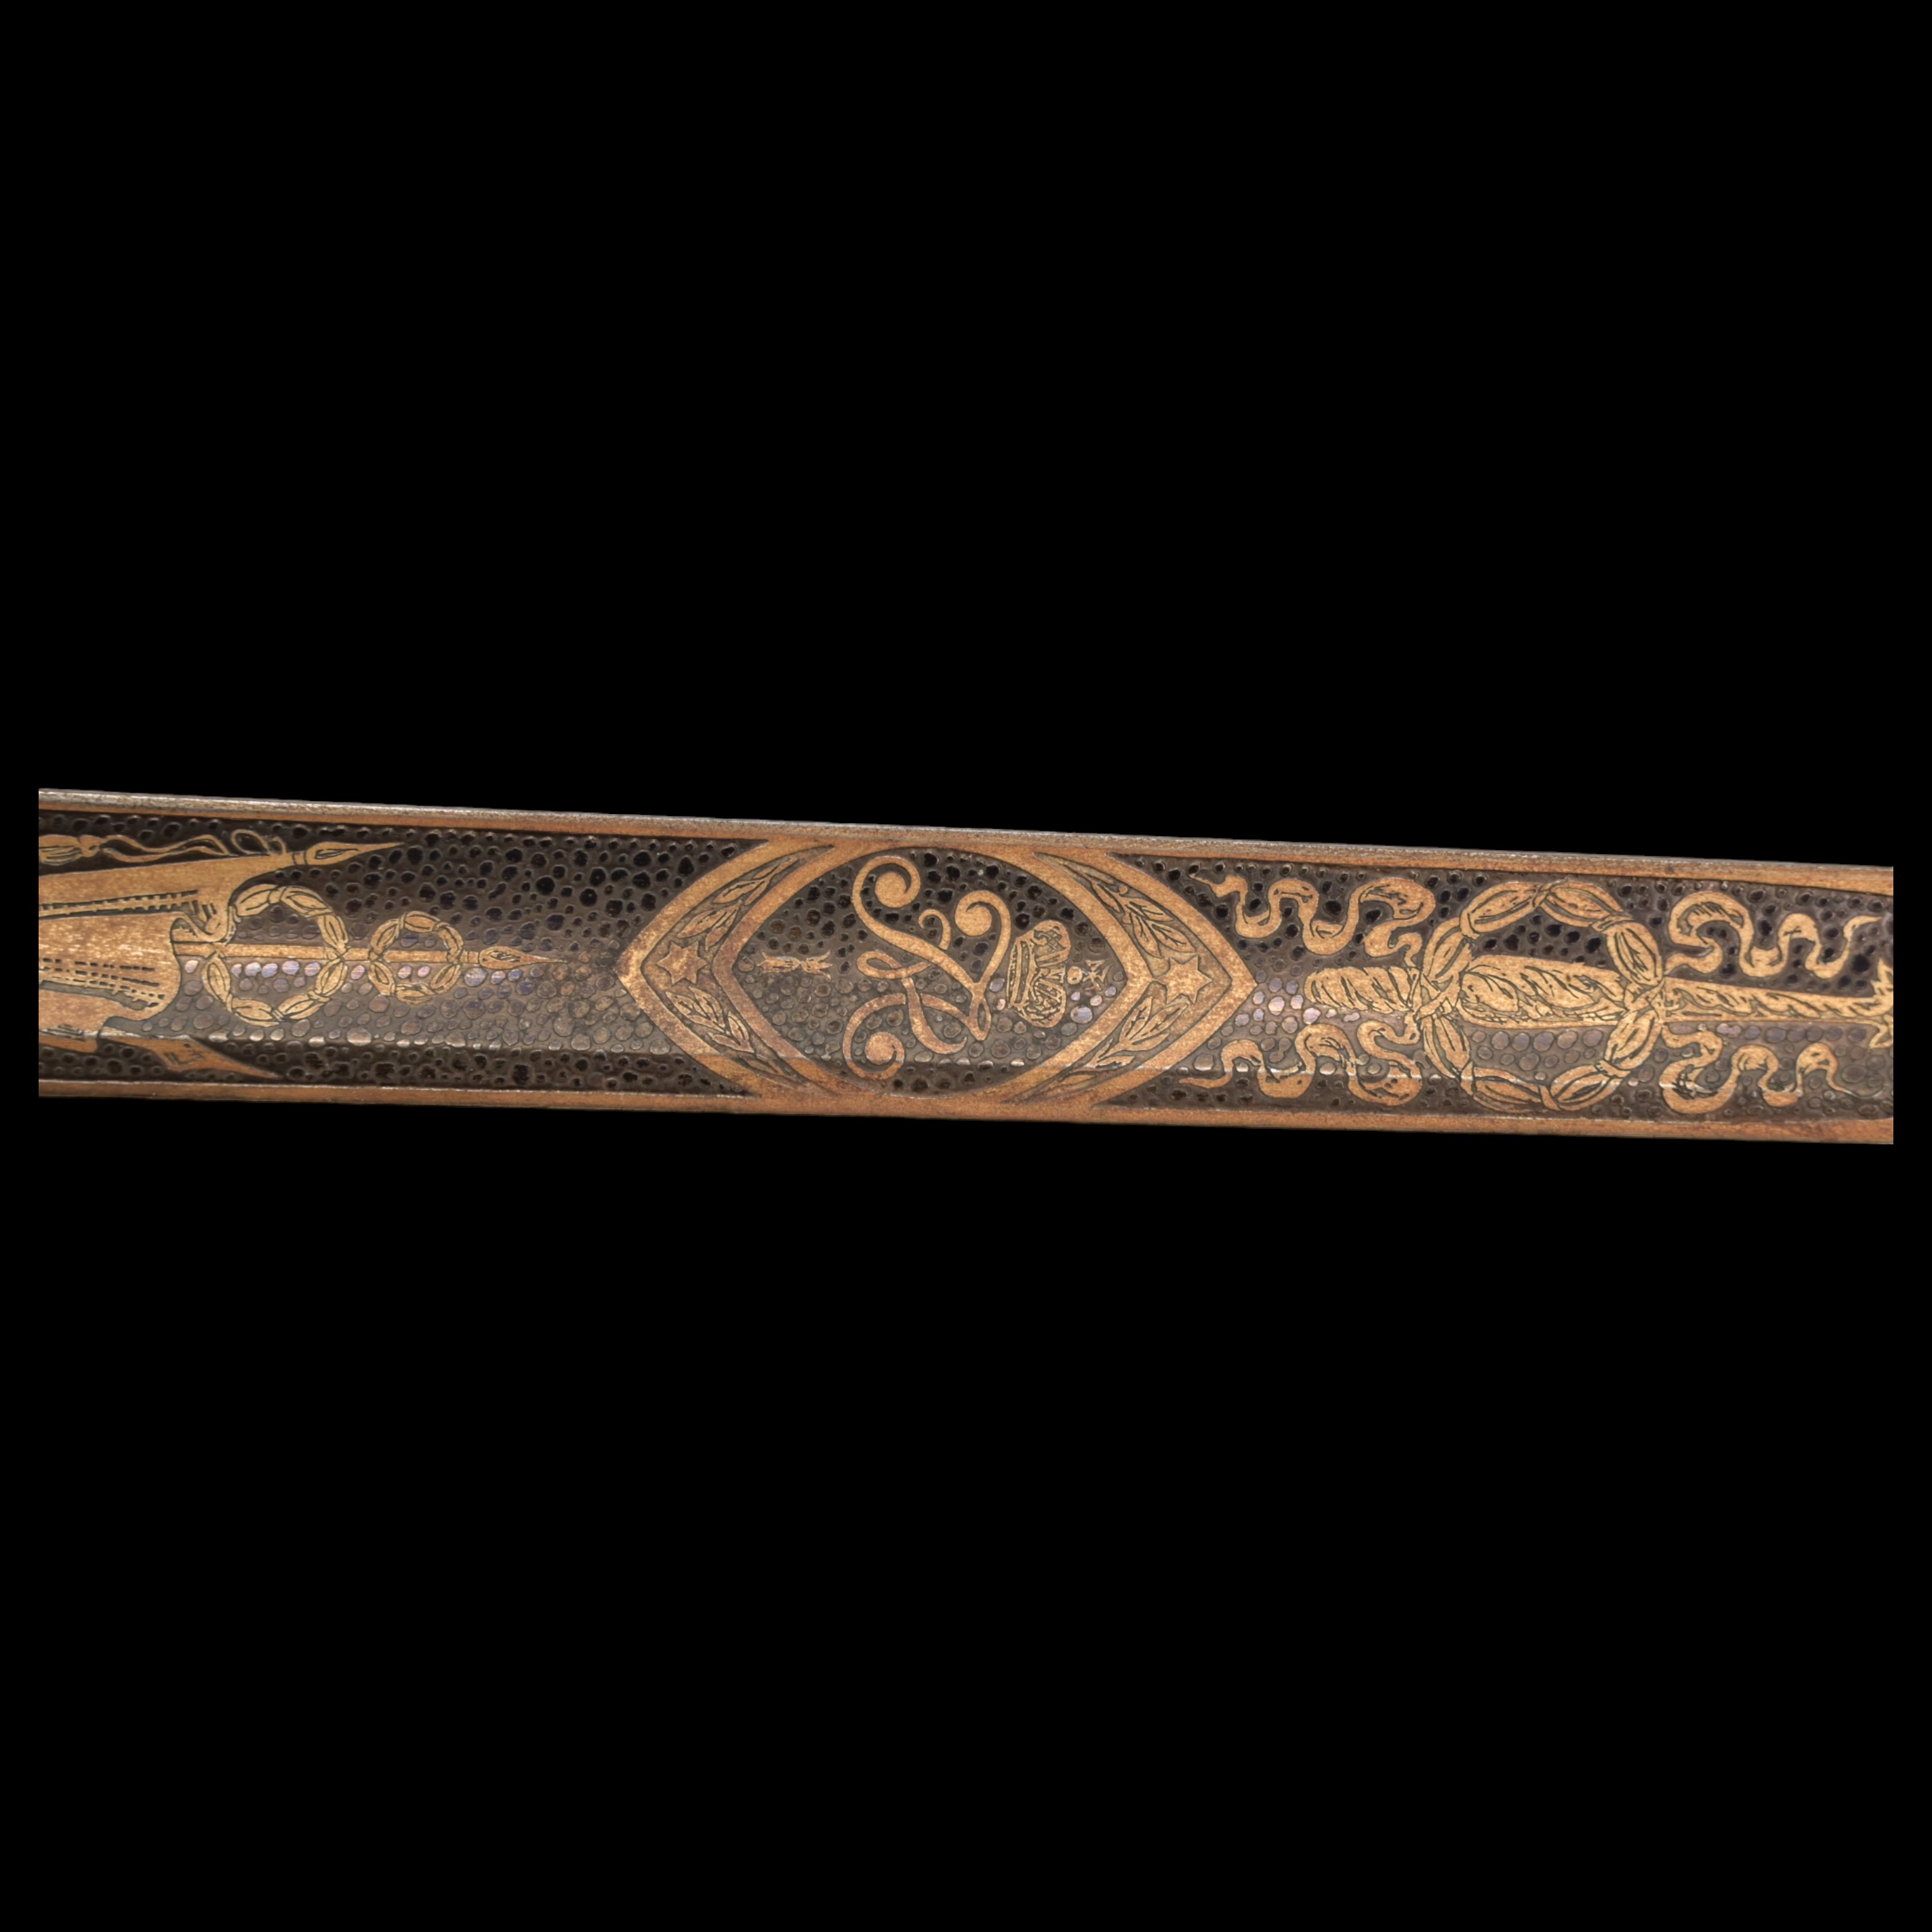 Russian sword, "For bravery" signature on the blade "I Boyarshinov, Zatoust, 1831". - Image 19 of 25